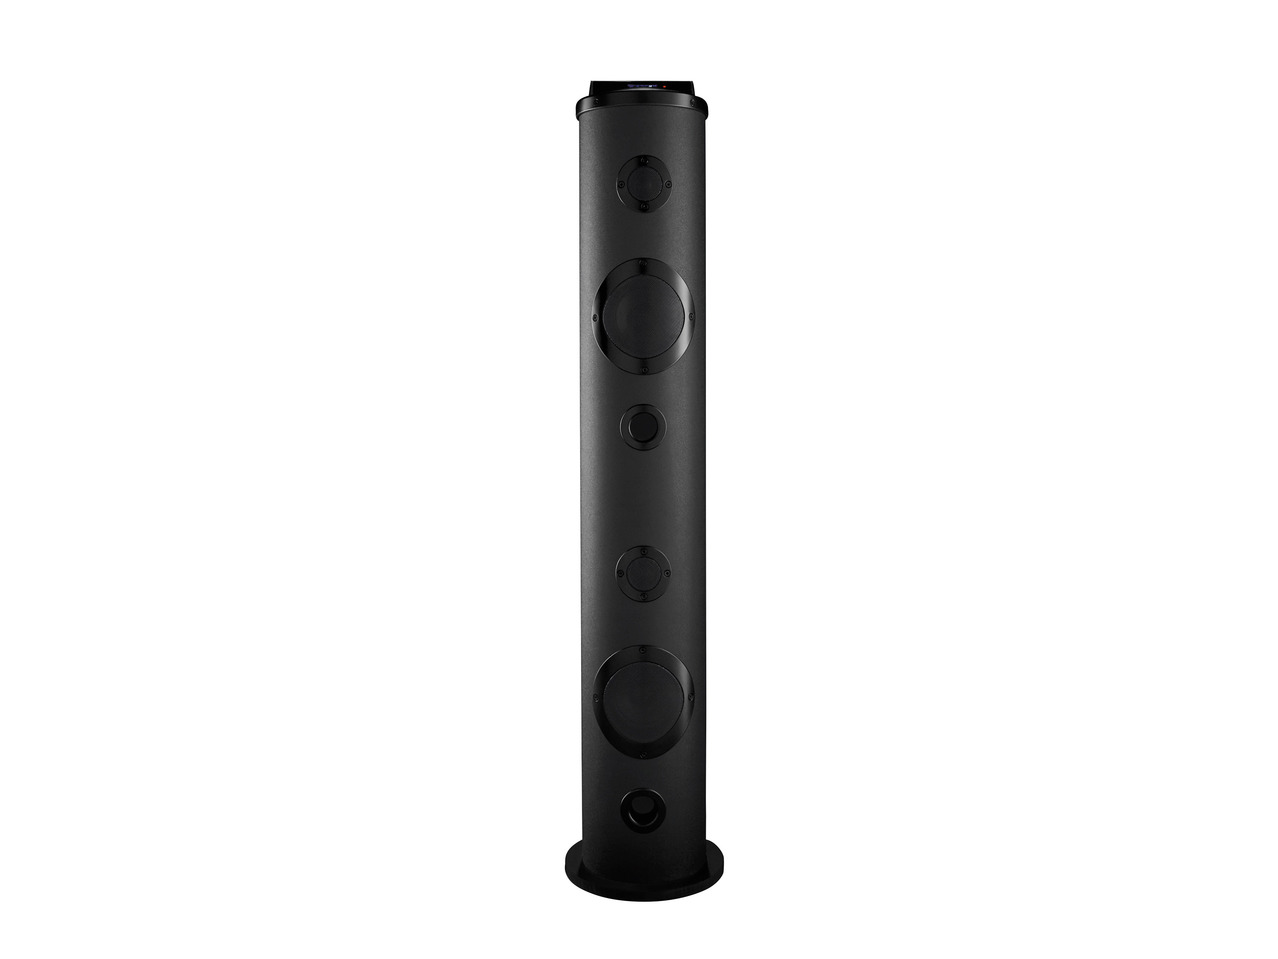 Silvercrest Bluetooth(R) Speaker Tower1